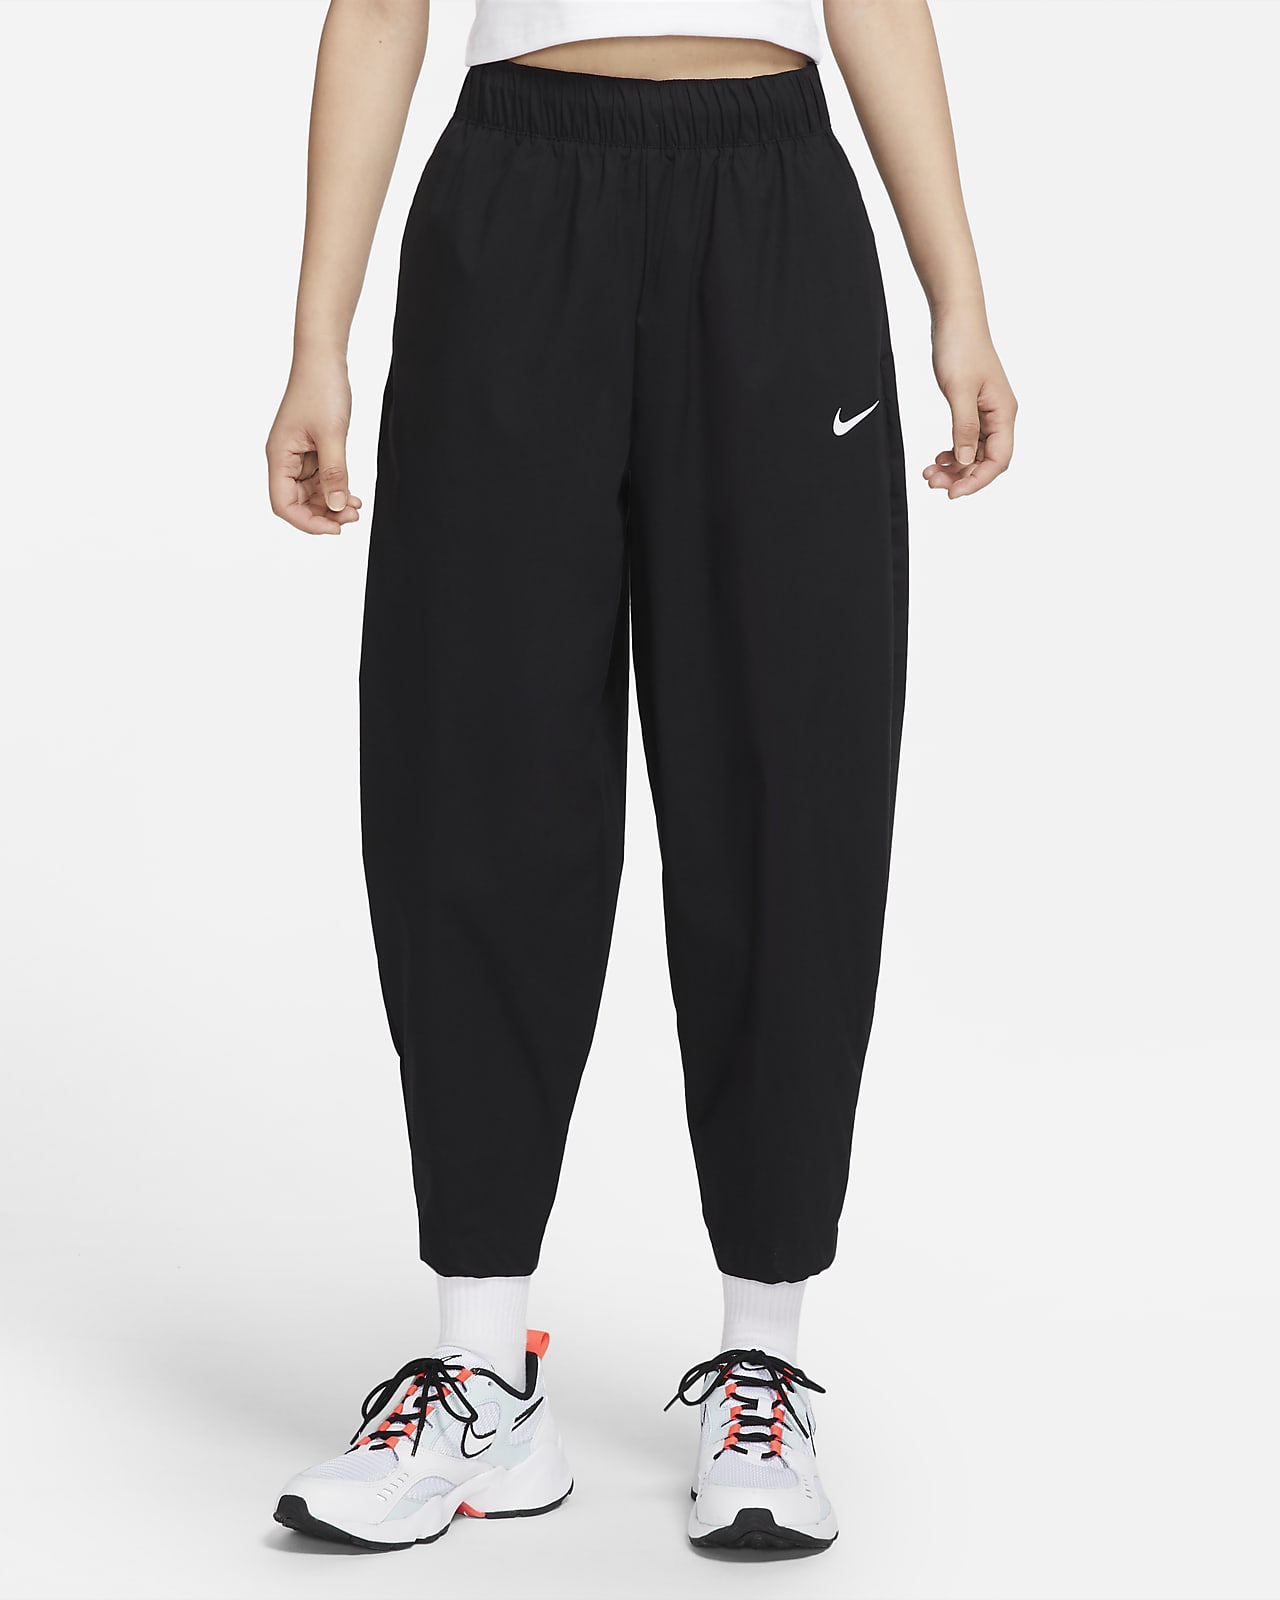 Nike - Sportswear Essential 女款高腰內搭褲緊身黑色- CZ8529-010